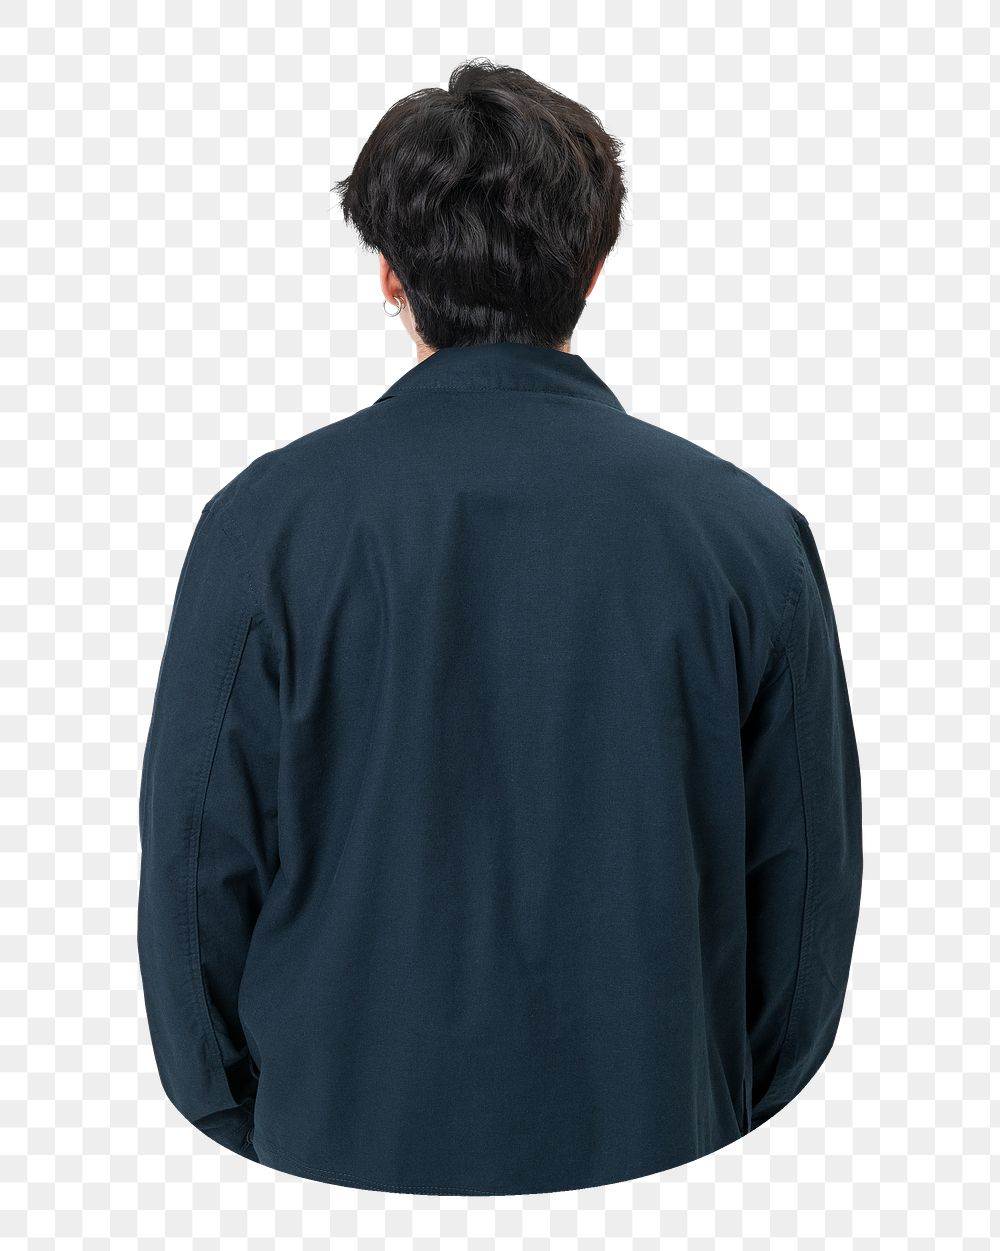 Png back, man in shirt image on transparent background